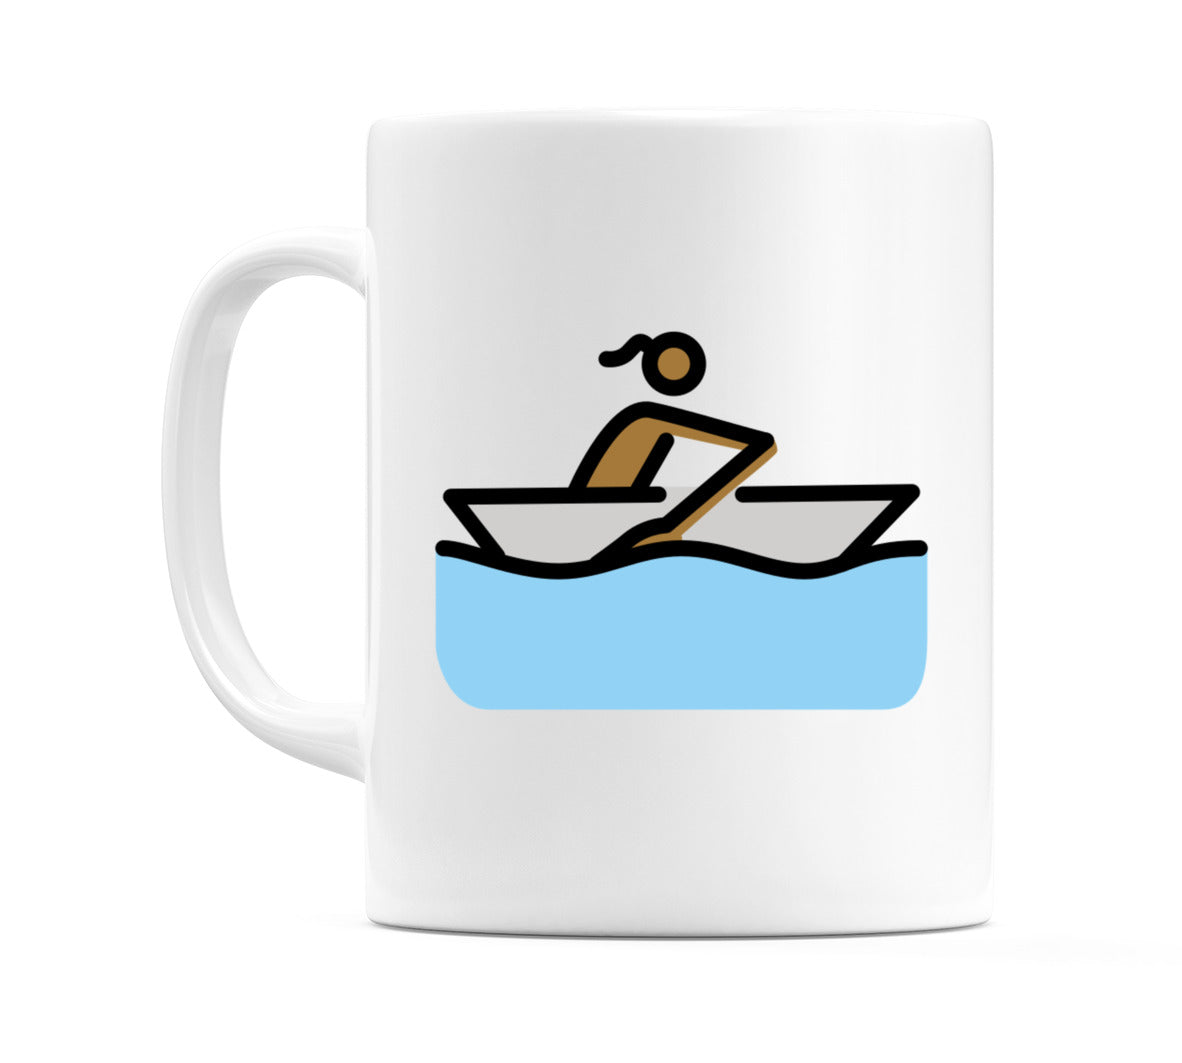 Female Rowing Boat: Medium-Dark Skin Tone Emoji Mug